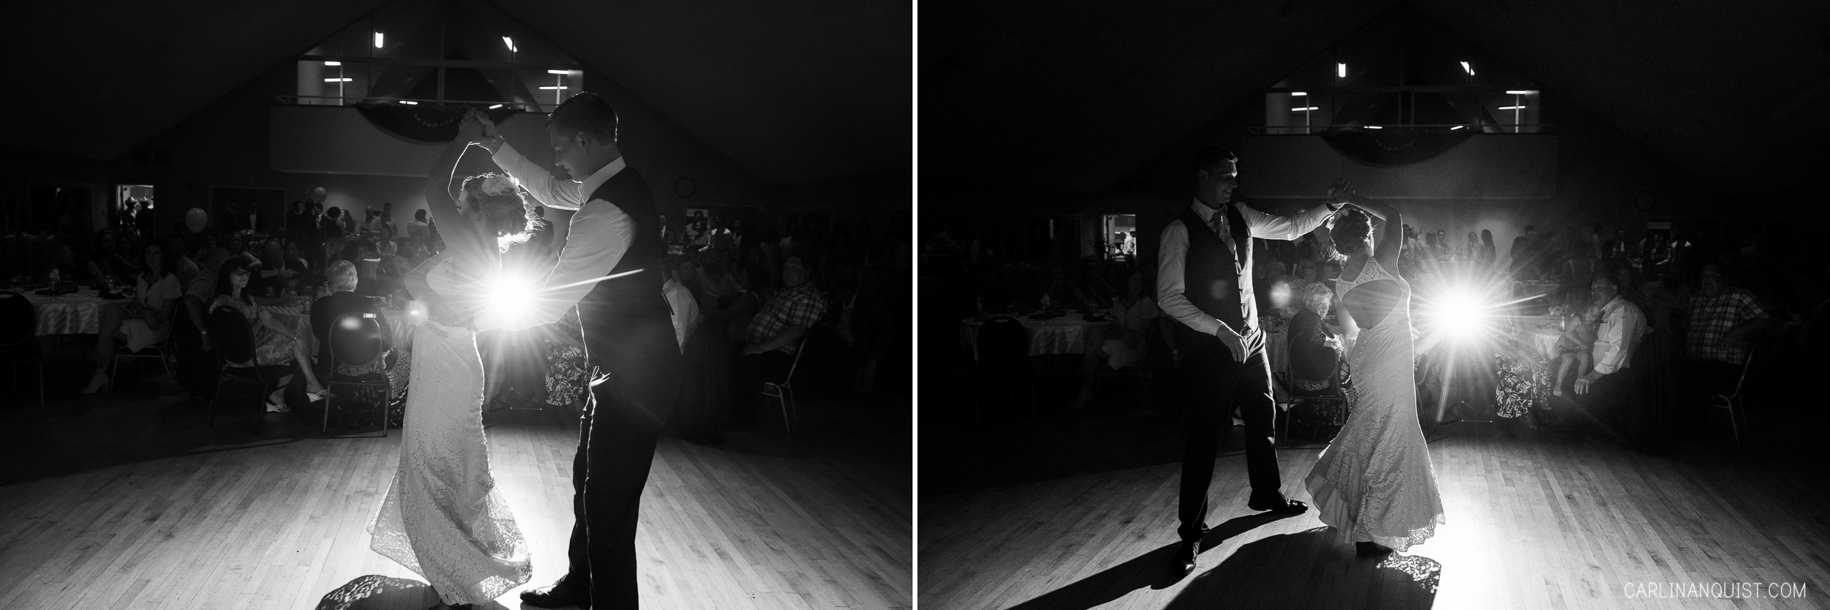 First Dance Photos | Calgary Wedding Photographer